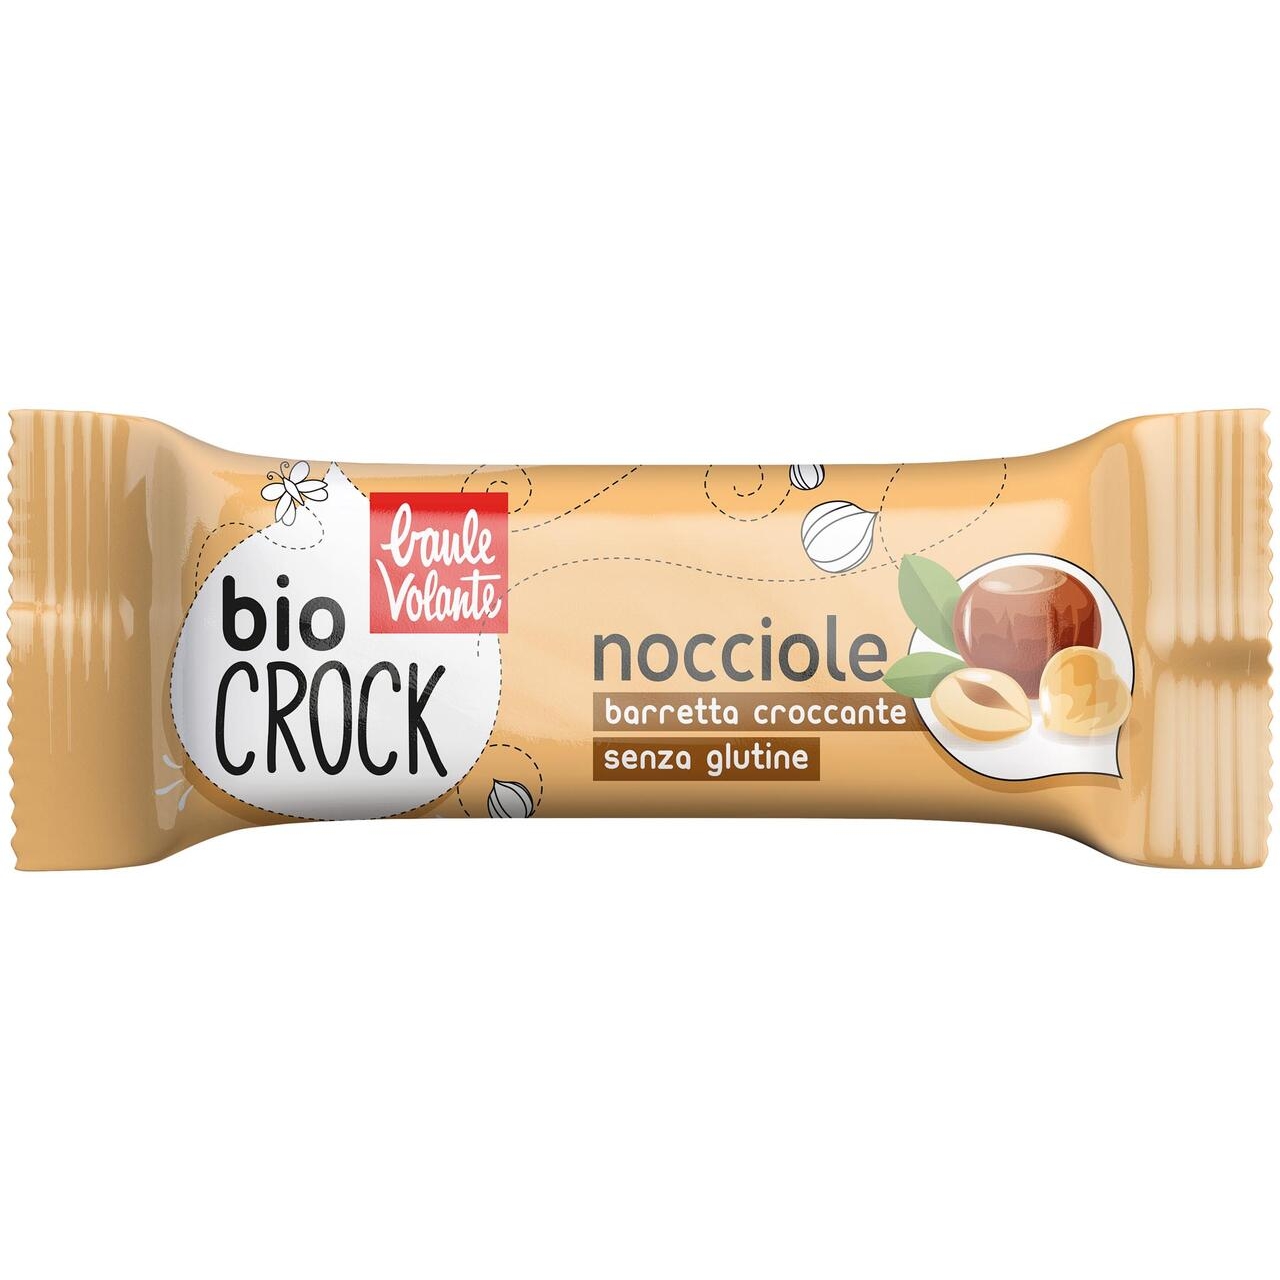 Bio crock – croccante di nocciole